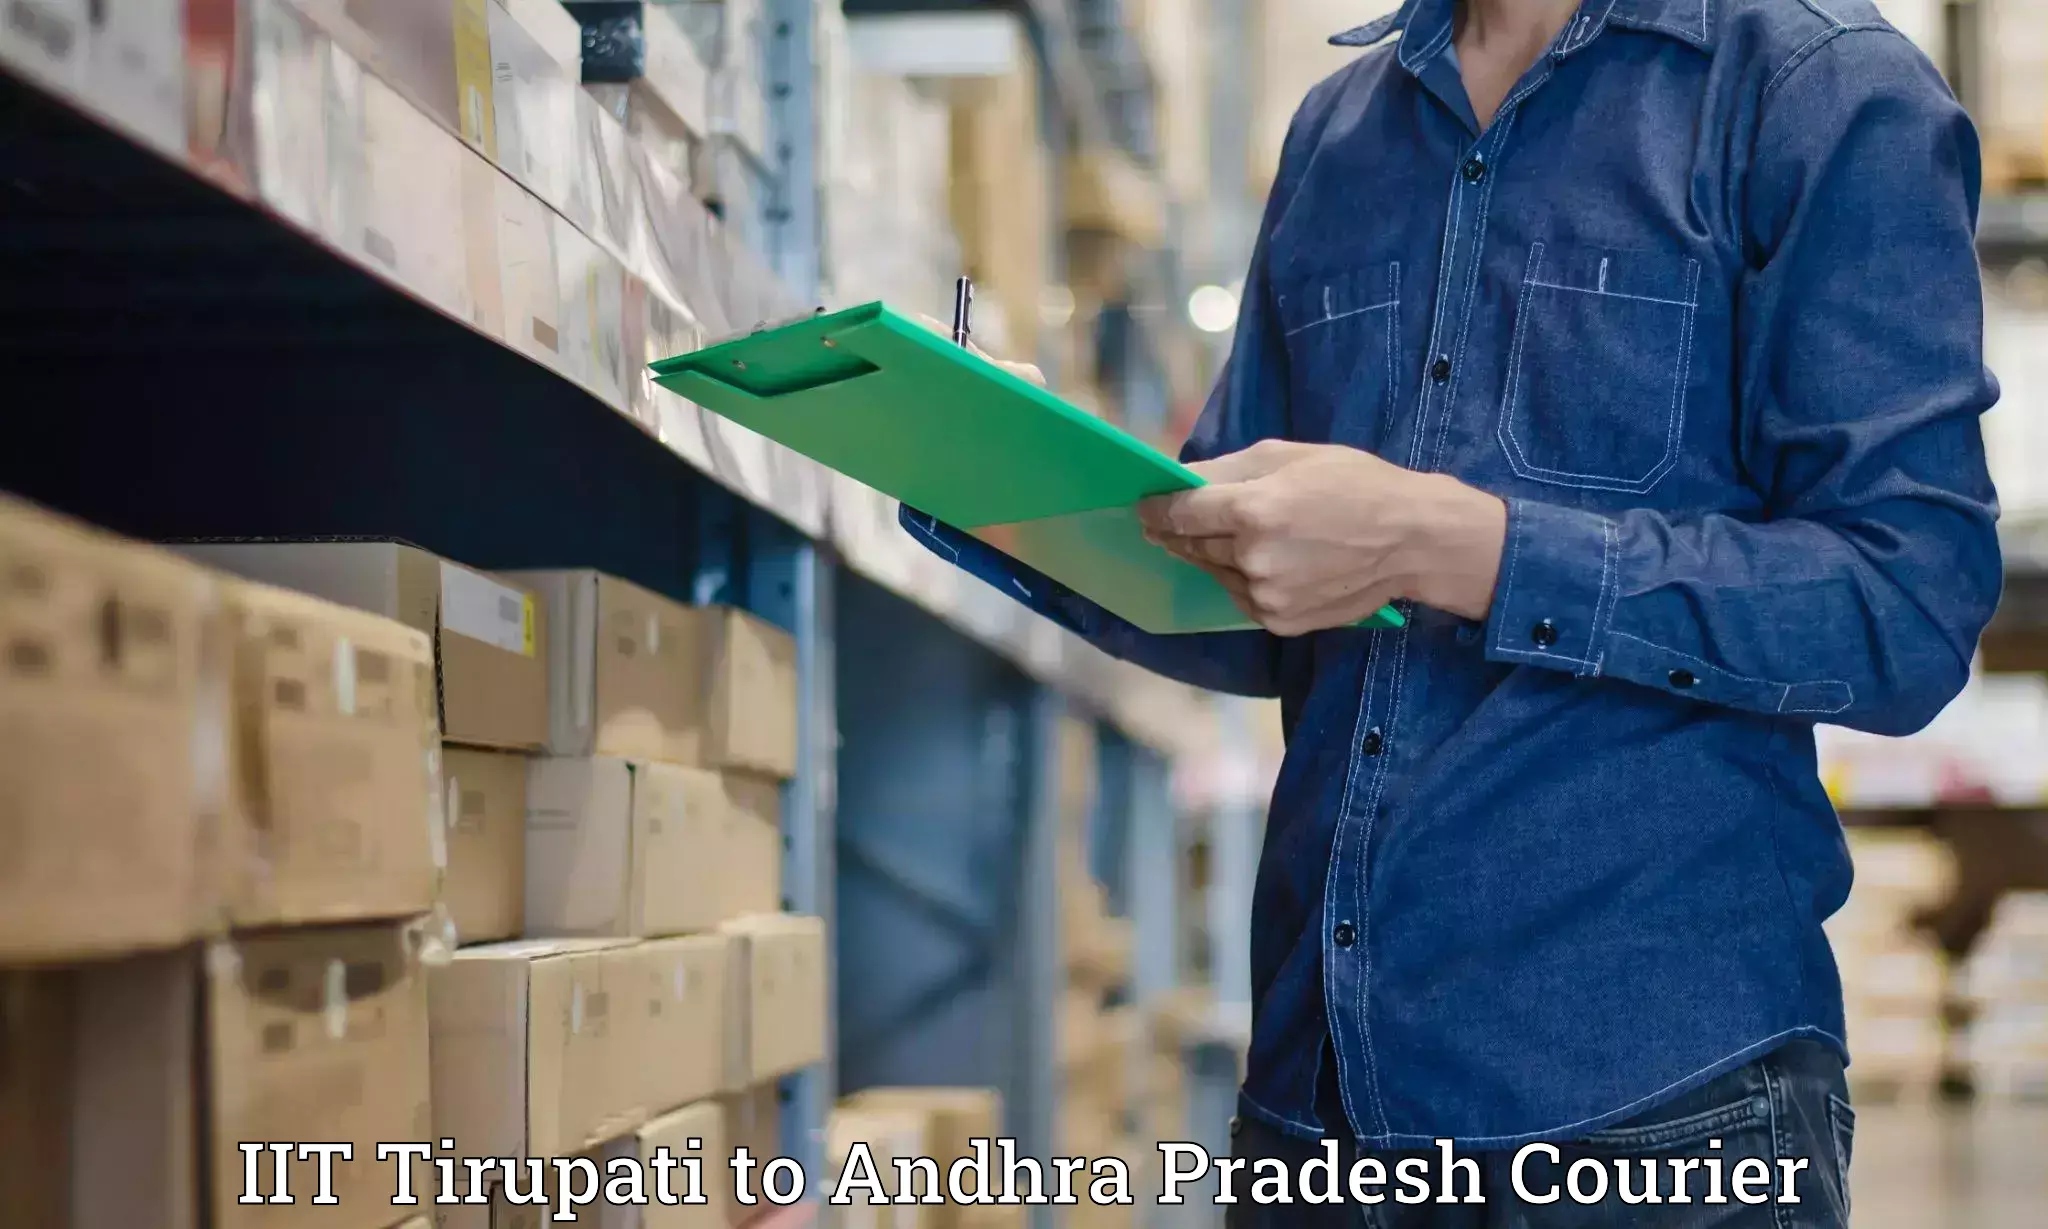 Easy access courier services IIT Tirupati to Vizianagaram